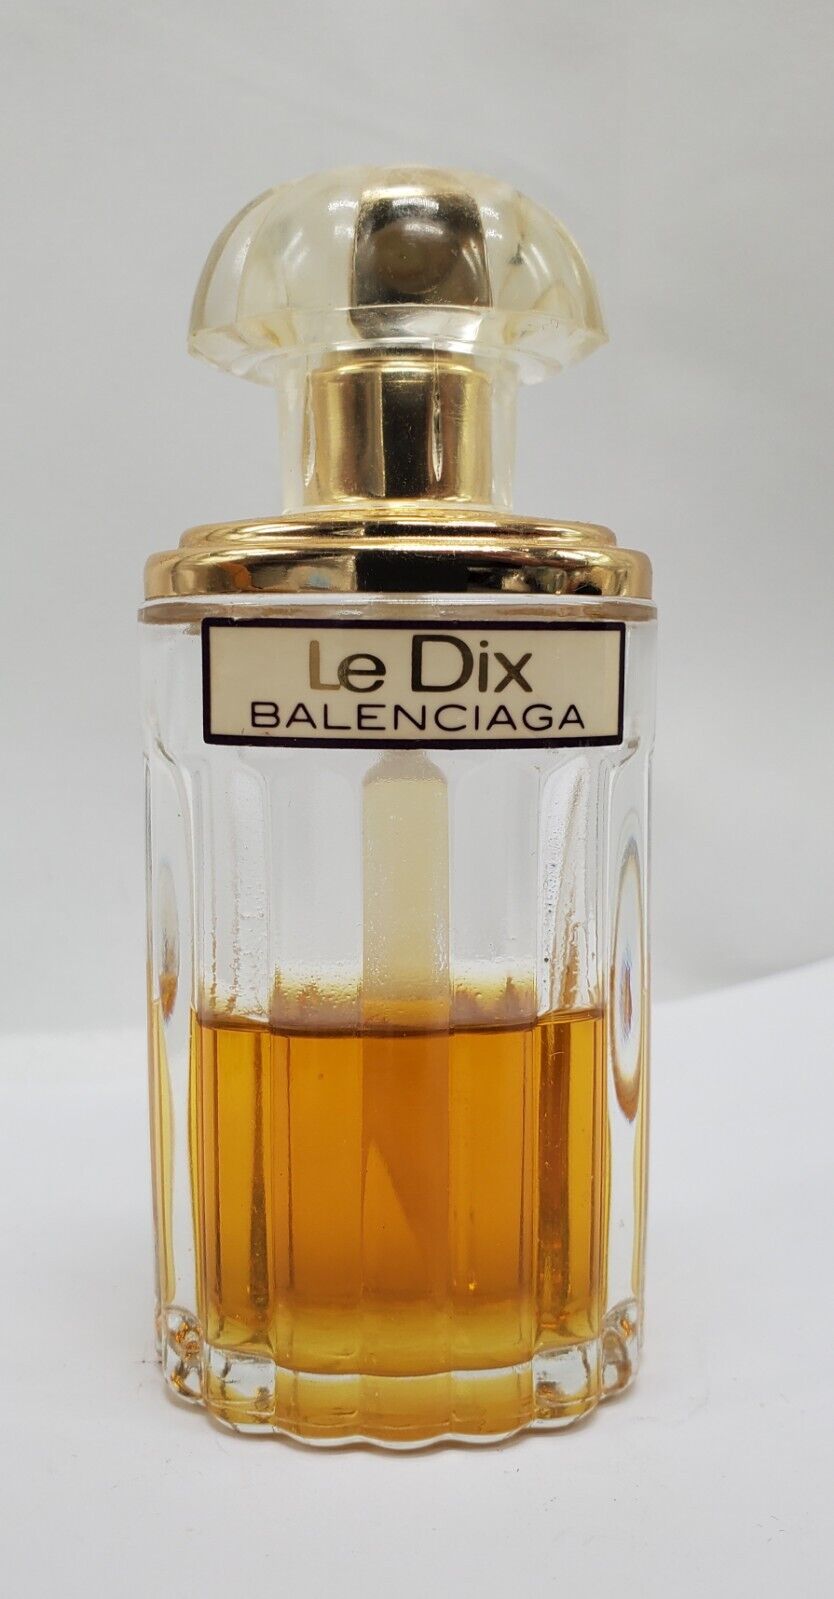 Balenciaga Le Dix Perfume Bottle EDT Spray France 1.66 oz 50ml 50% Full Vintage